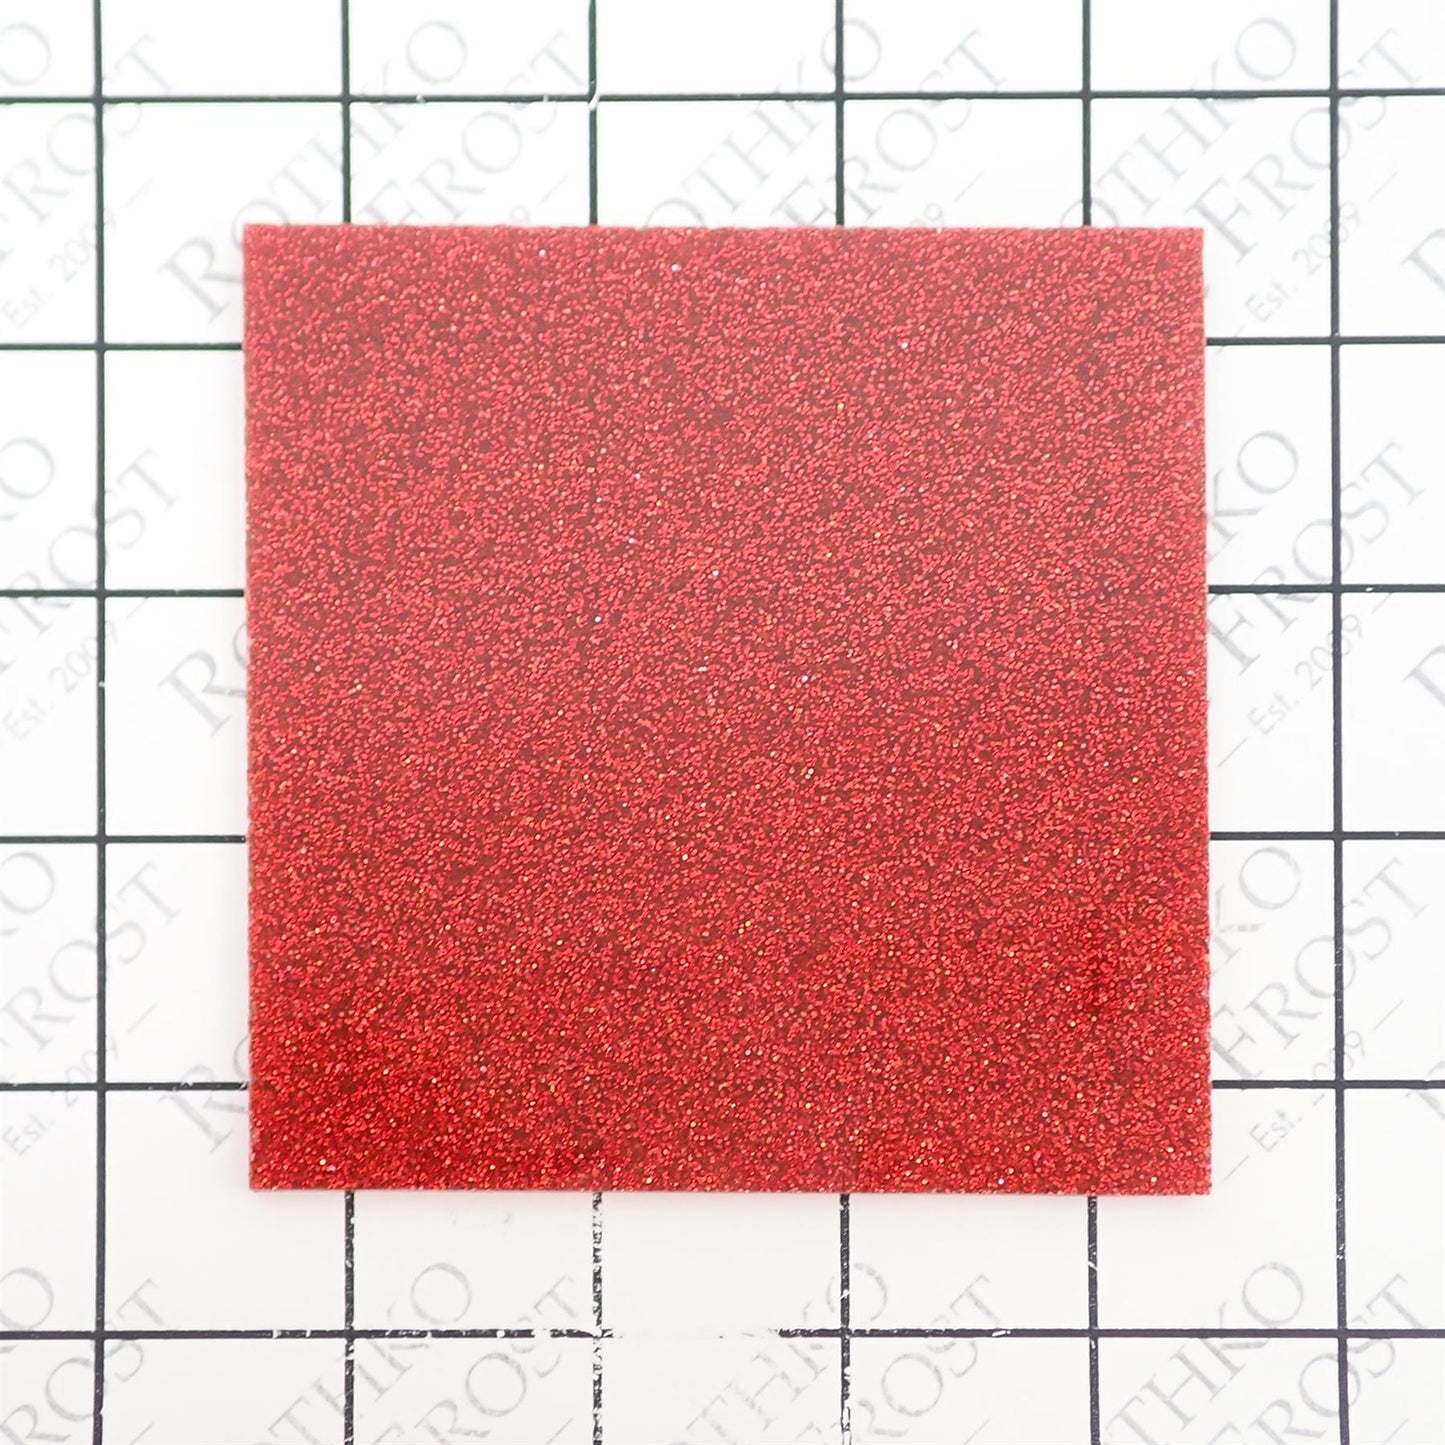 Incudo Red 2-Sided Glitter Acrylic Sheet - 300x200x3mm (11.8x7.87x0.12")